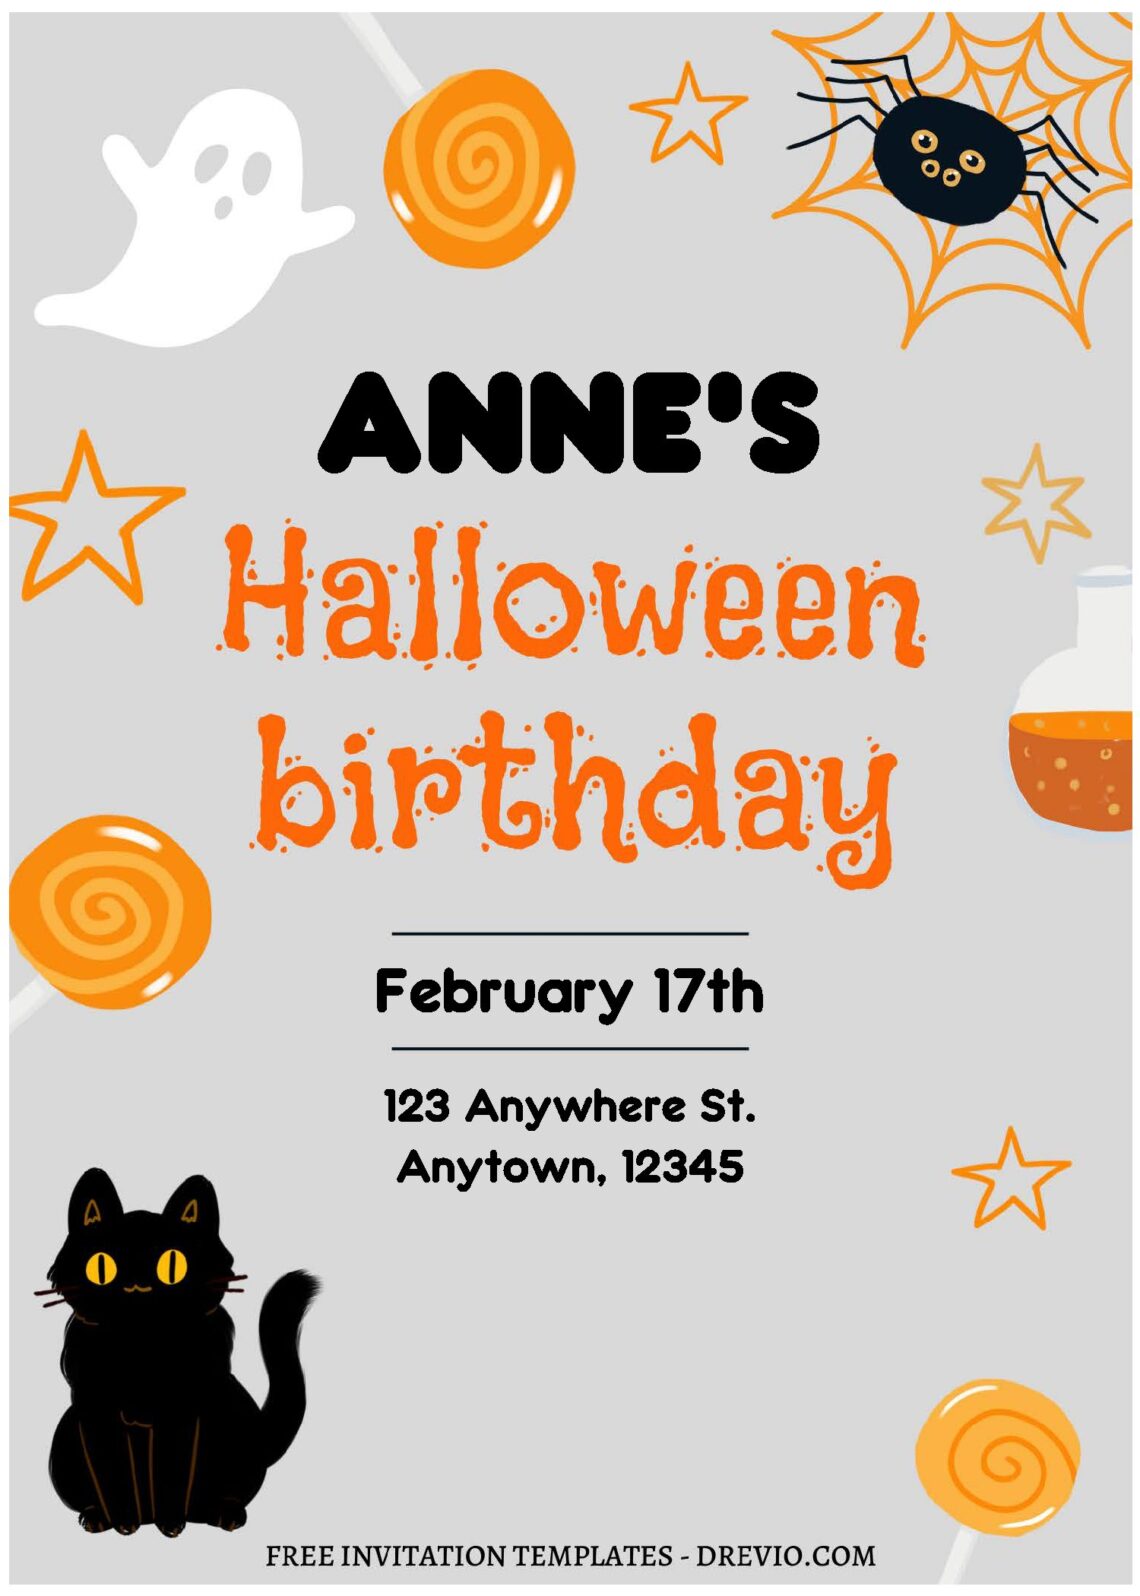 (Free Editable PDF) Spooky Halloween Kids Birthday Invitation Templates B